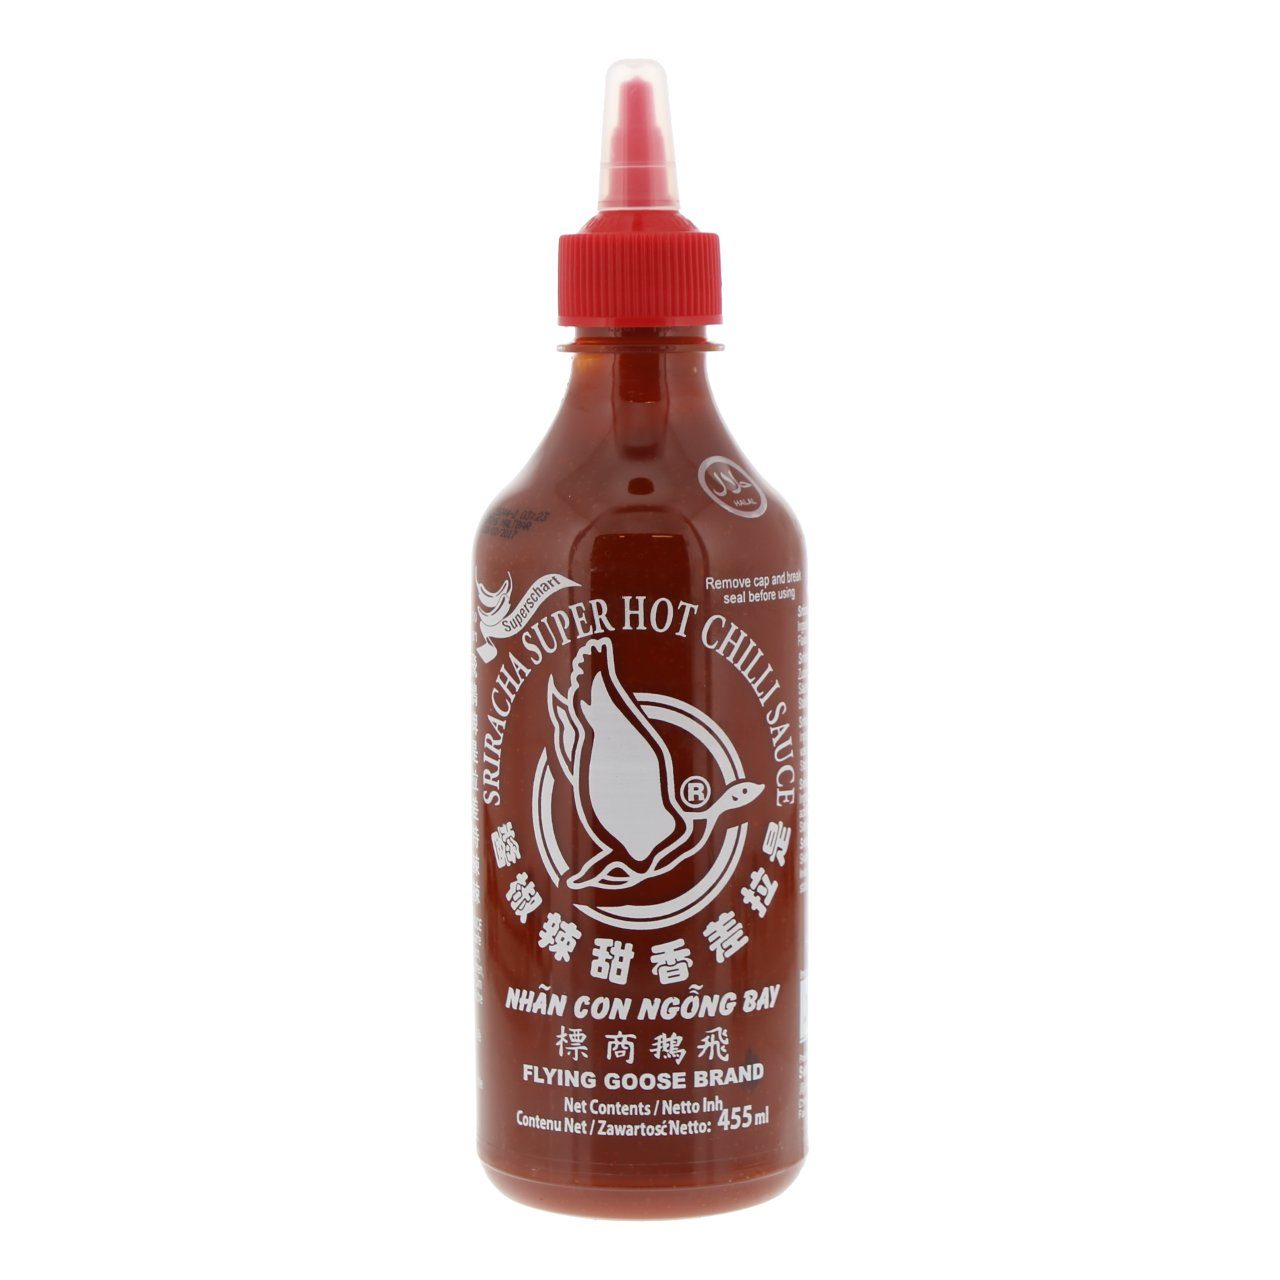 Chilisaus Sriracha extra heet